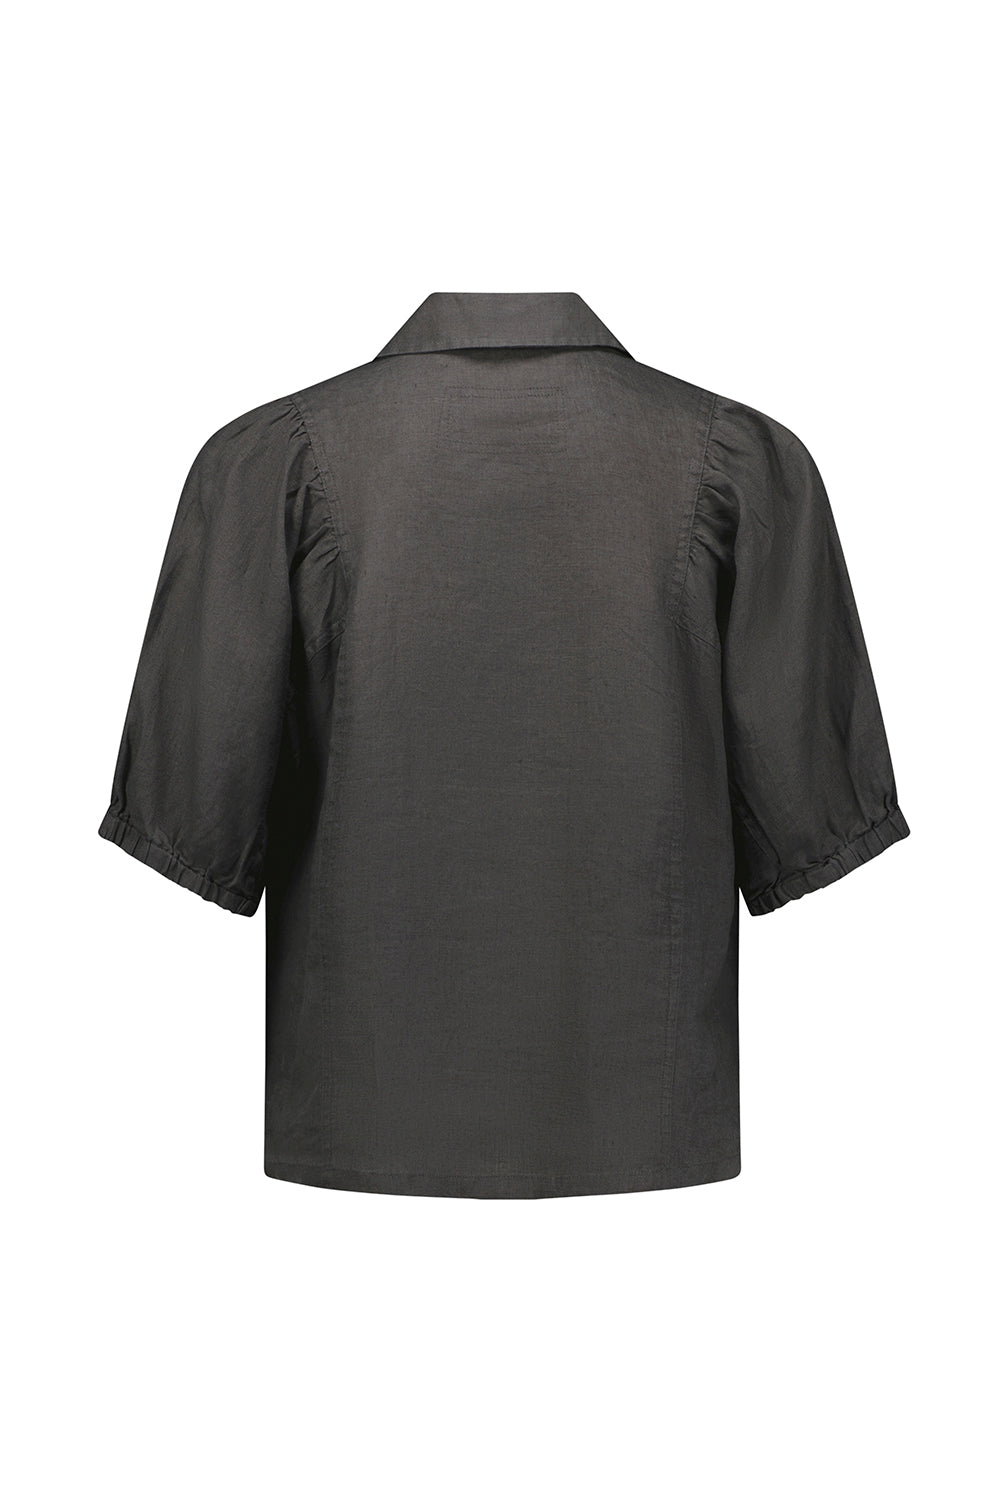 Adorn Shirt - Carbon - Shirt VERGE